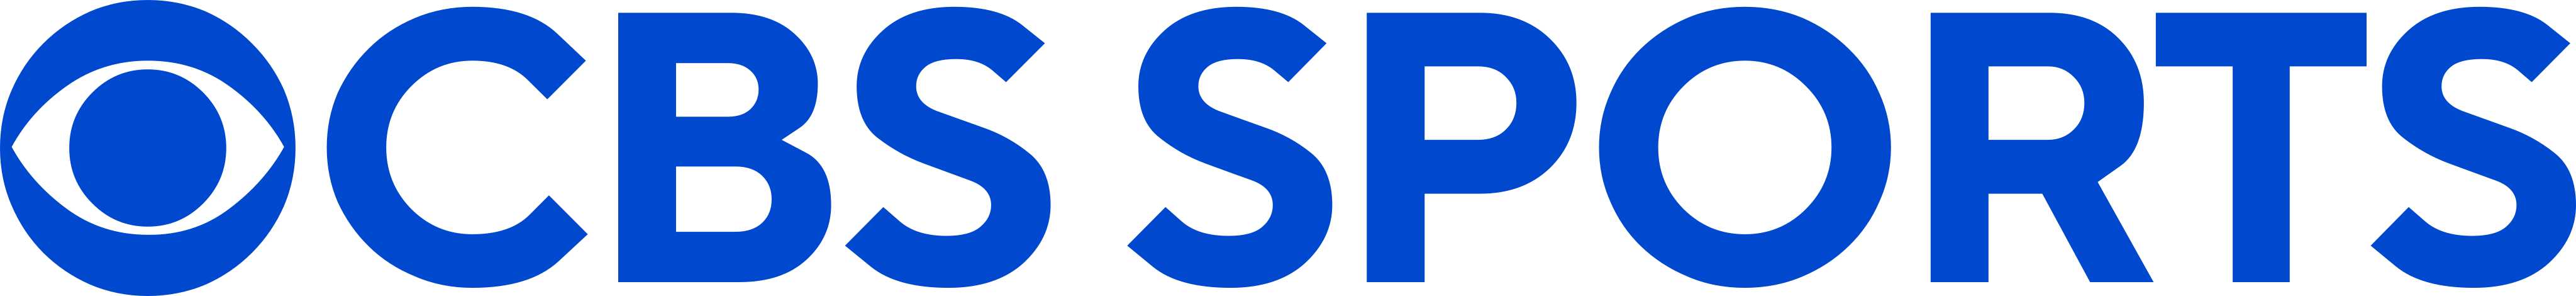 cbs sports logo 1 - CBS Sports Logo